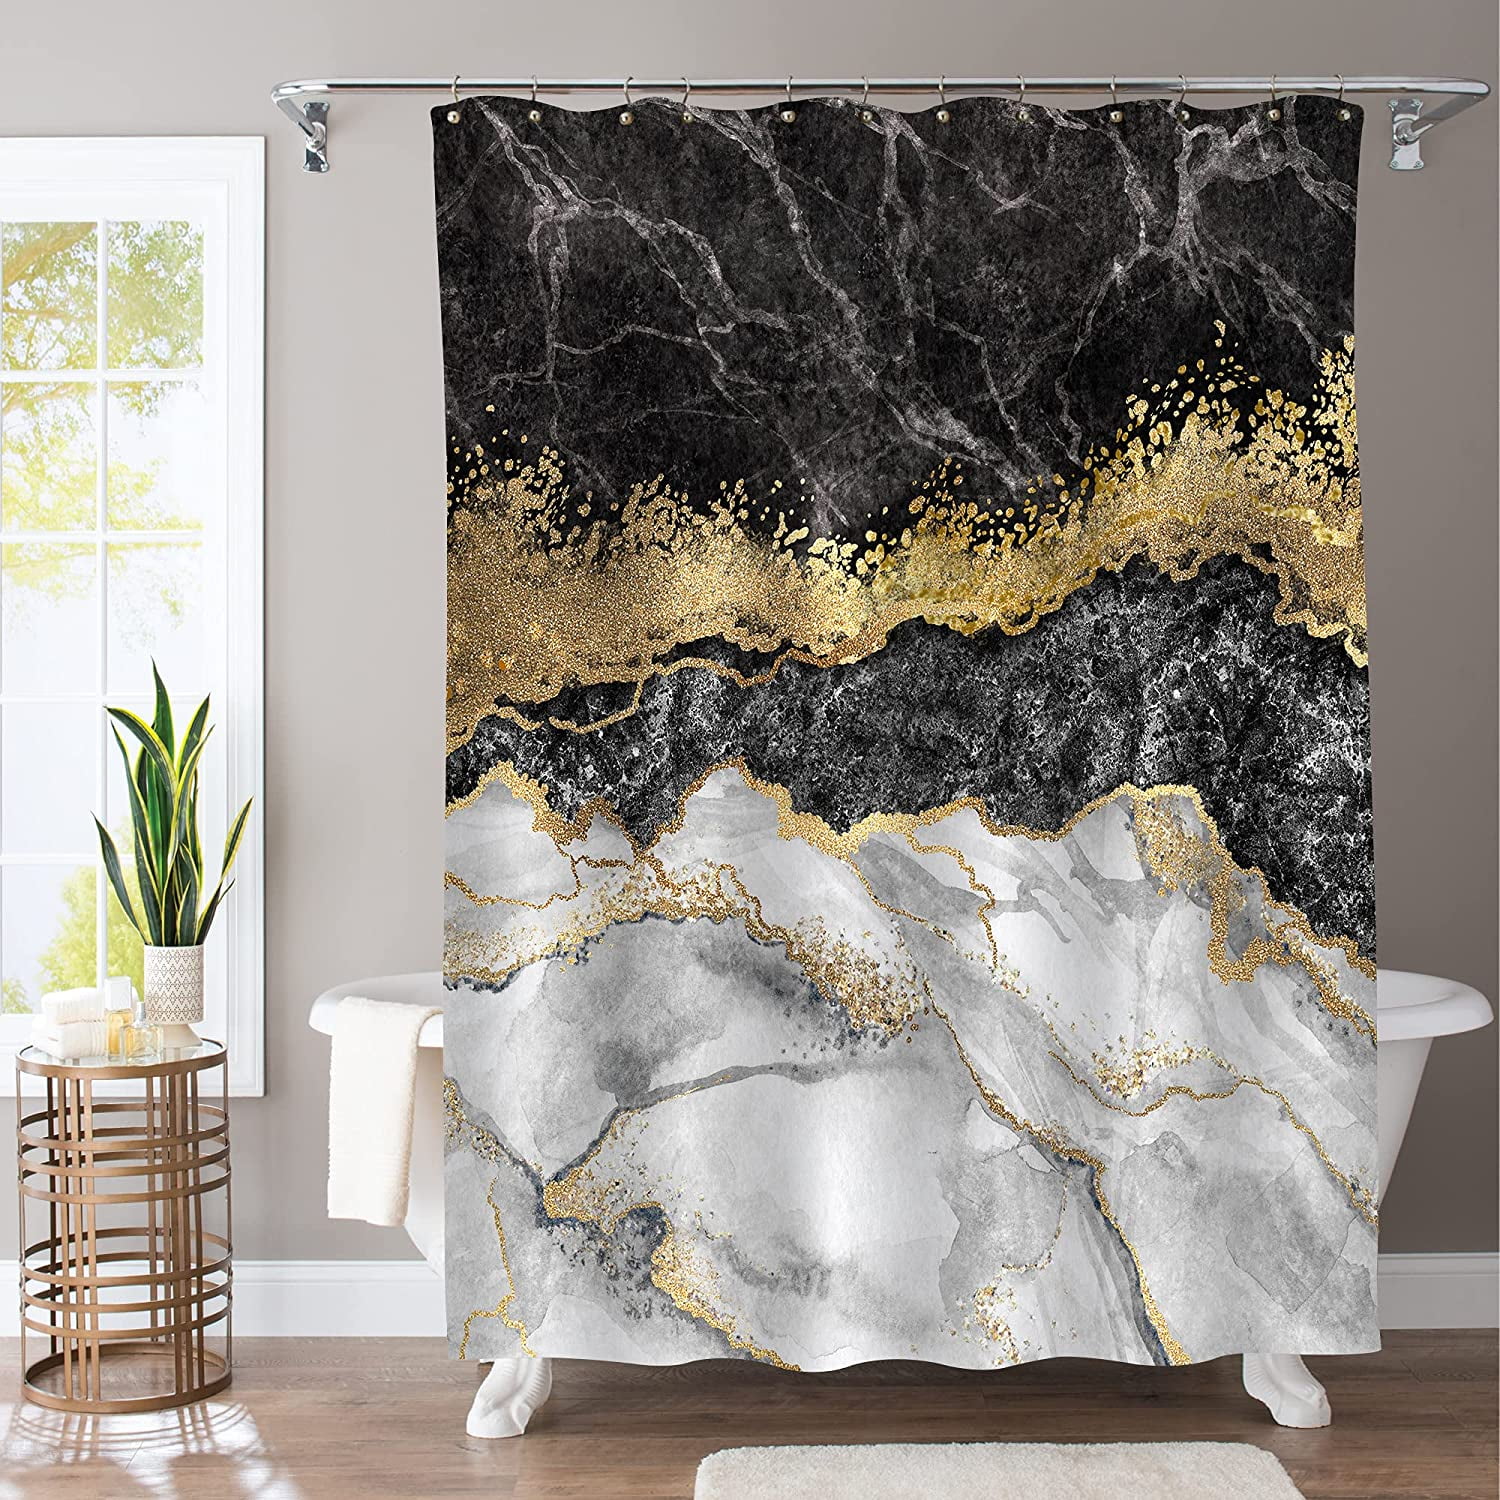 Black and White Marble Shower Curtain Geometric Bath Curtain Waterproof 72"x72" 